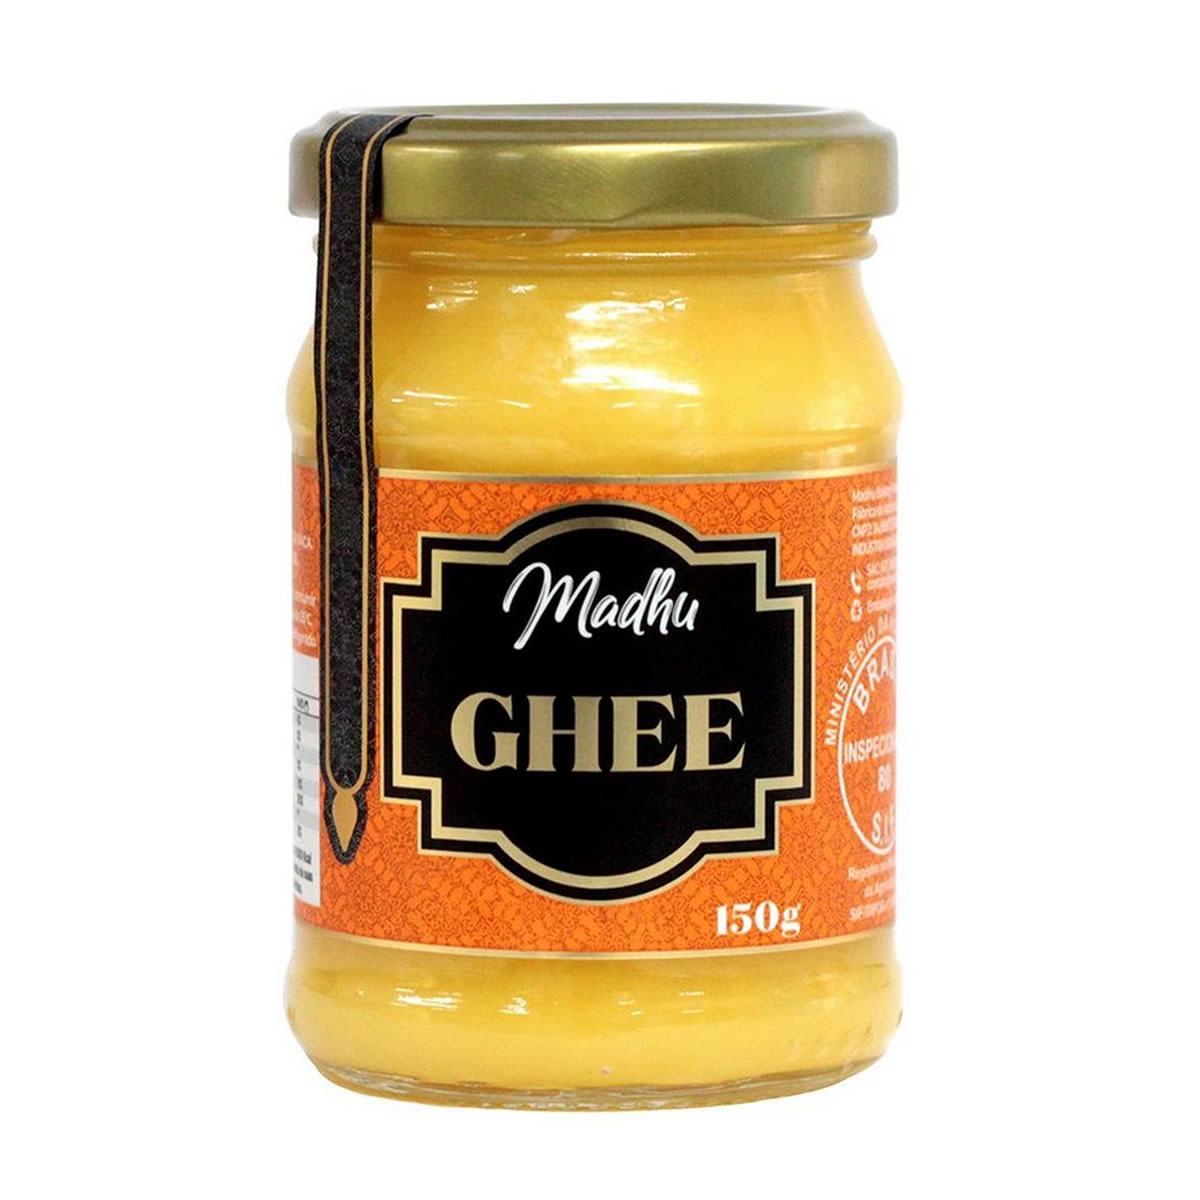 Manteiga Ghee Original 150g - Madhu